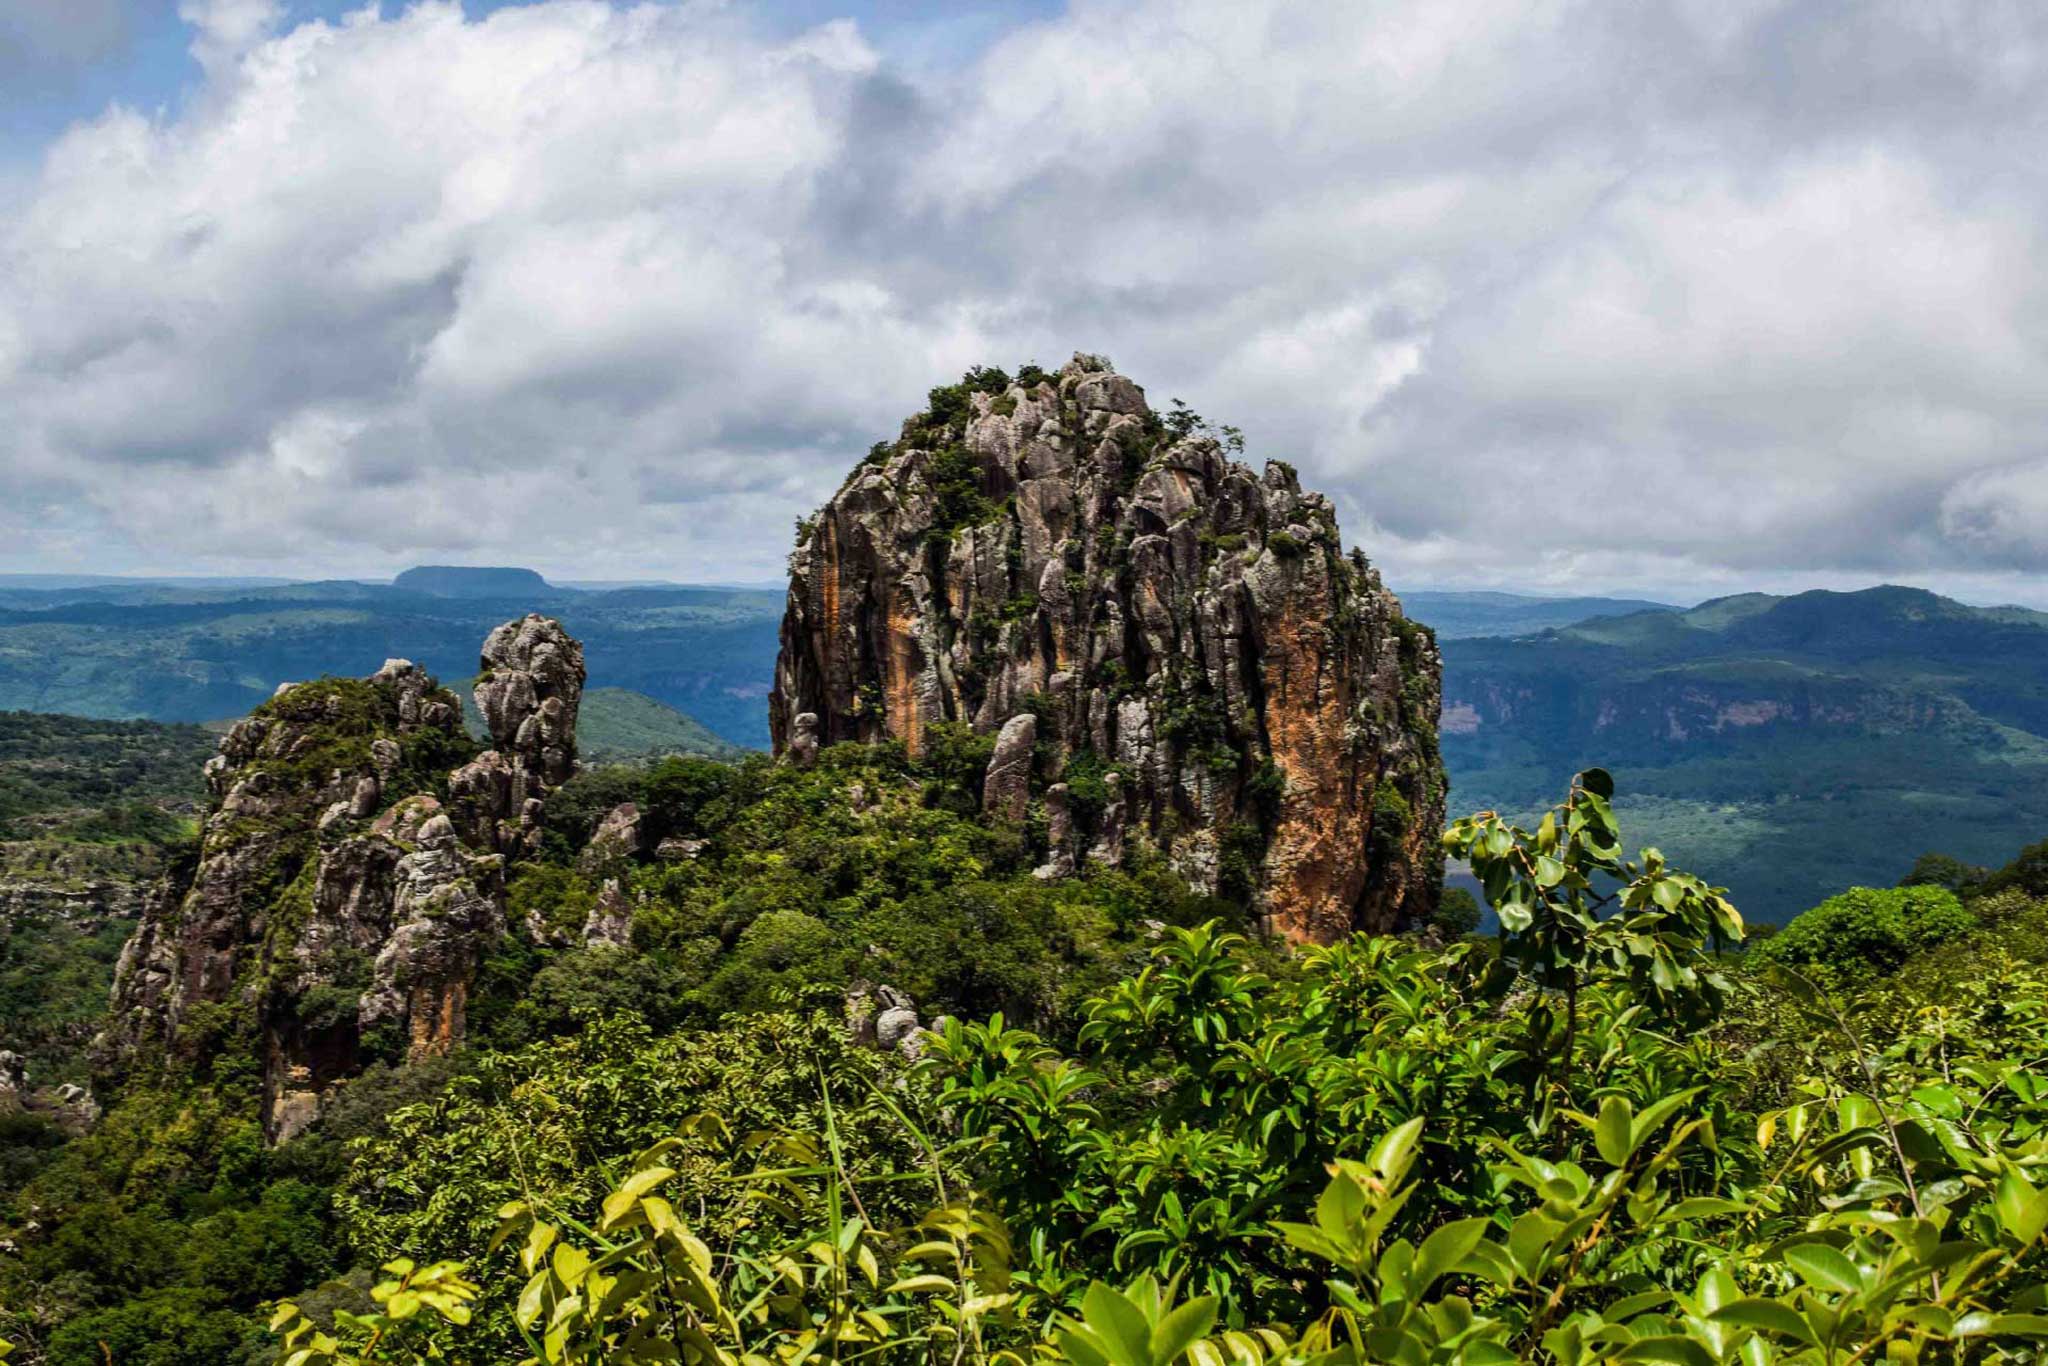 Pita-donghol-touma-falaise-de-doucky-guinee-miranass-tourisme-landscape